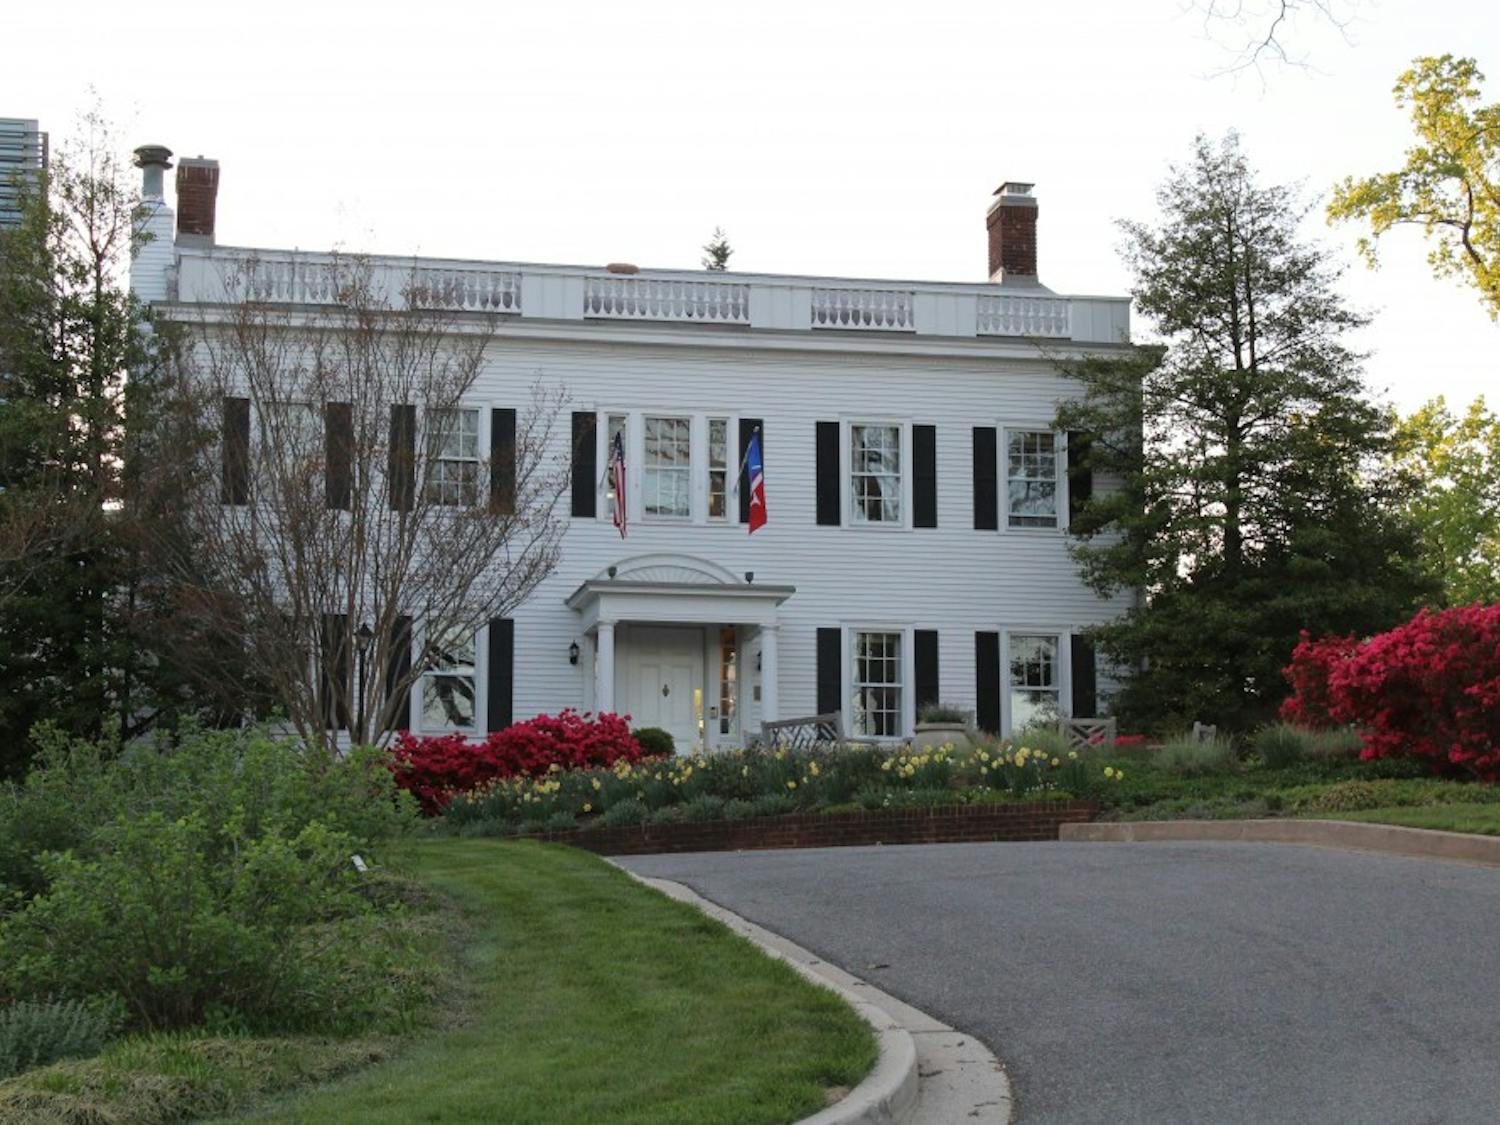 Presidents House